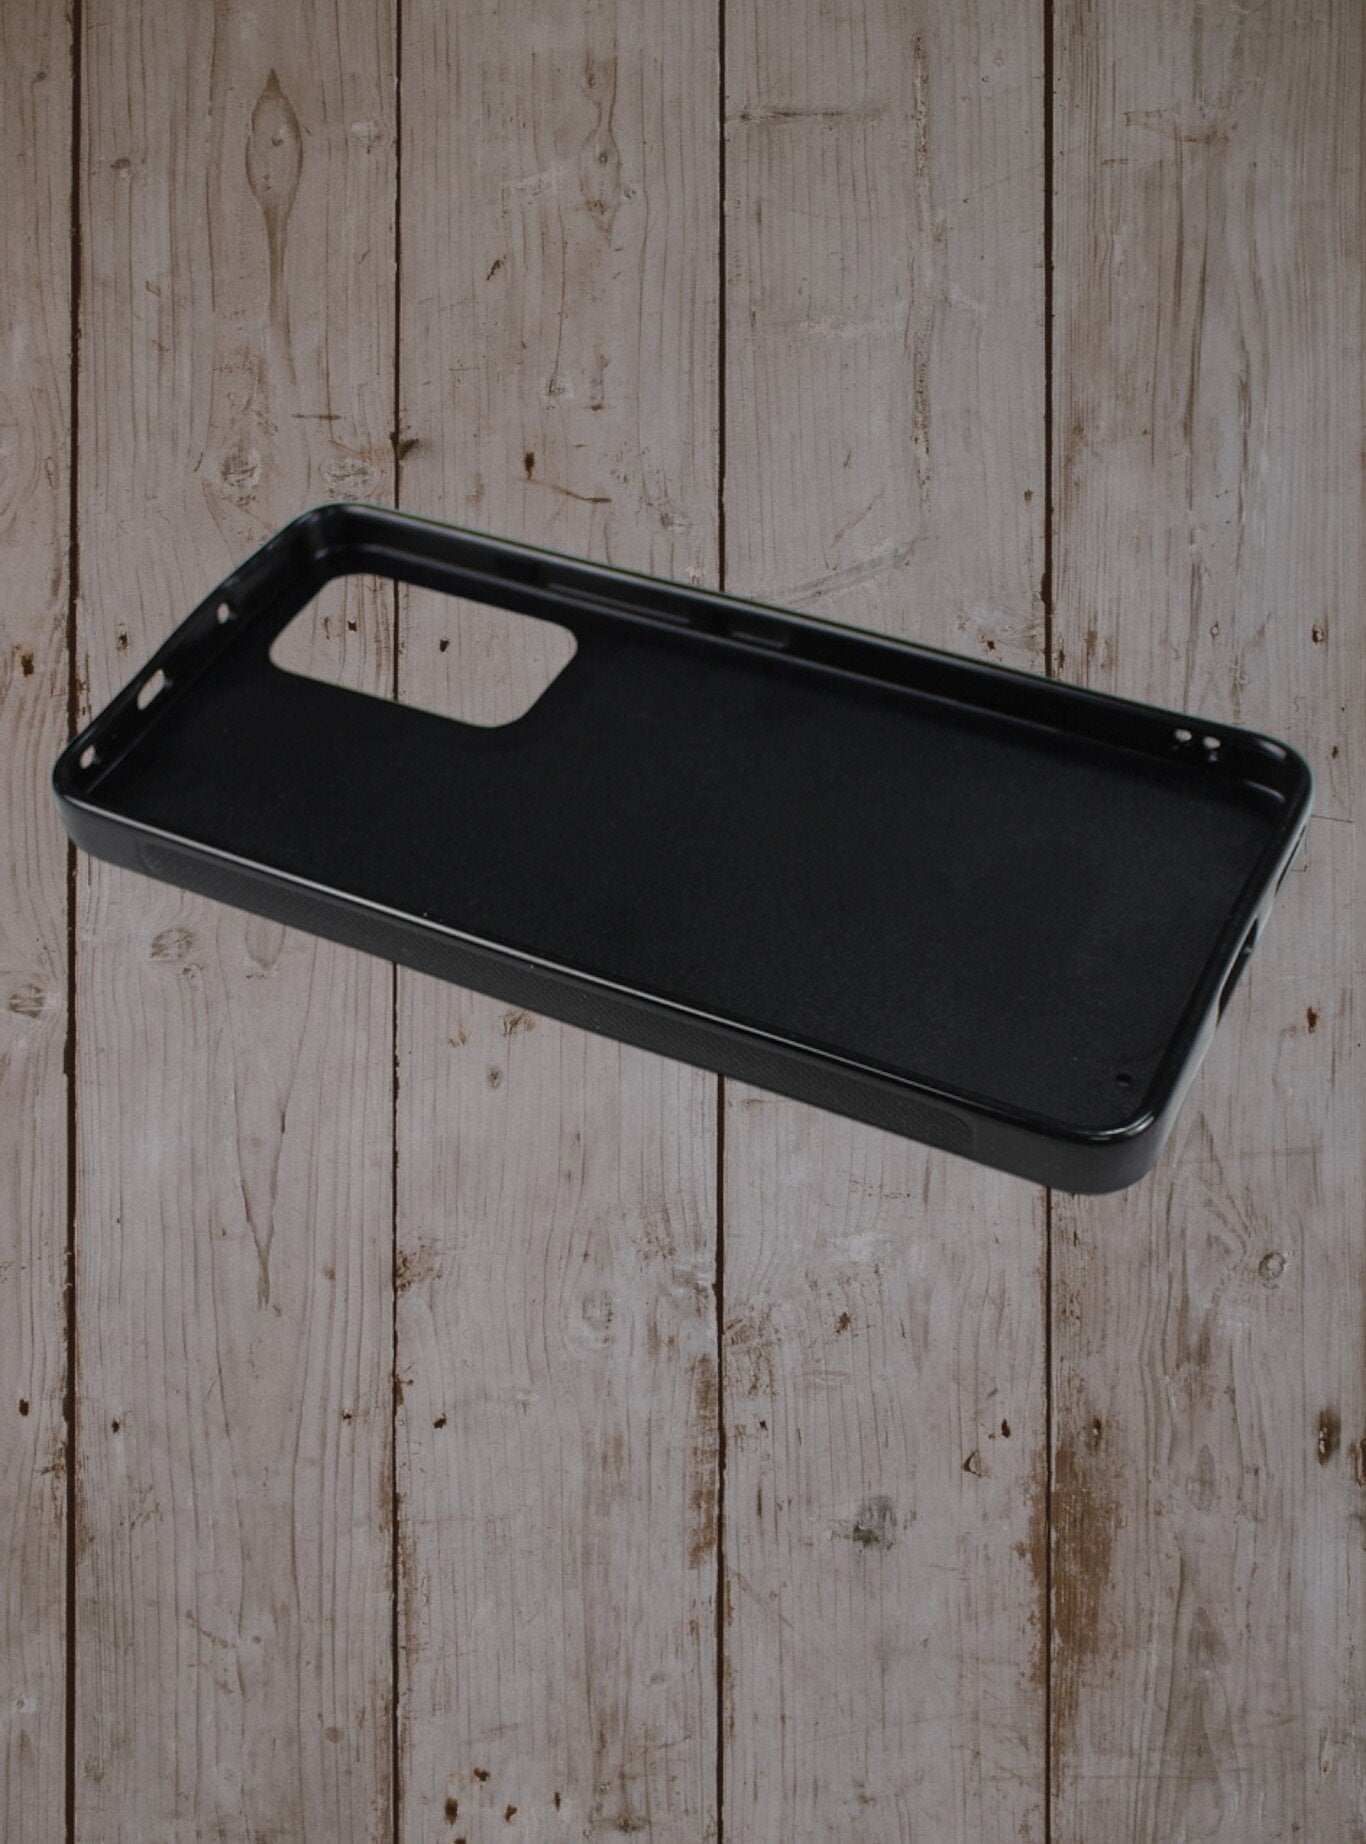 Xiaomi Redmi Note Case - Deer